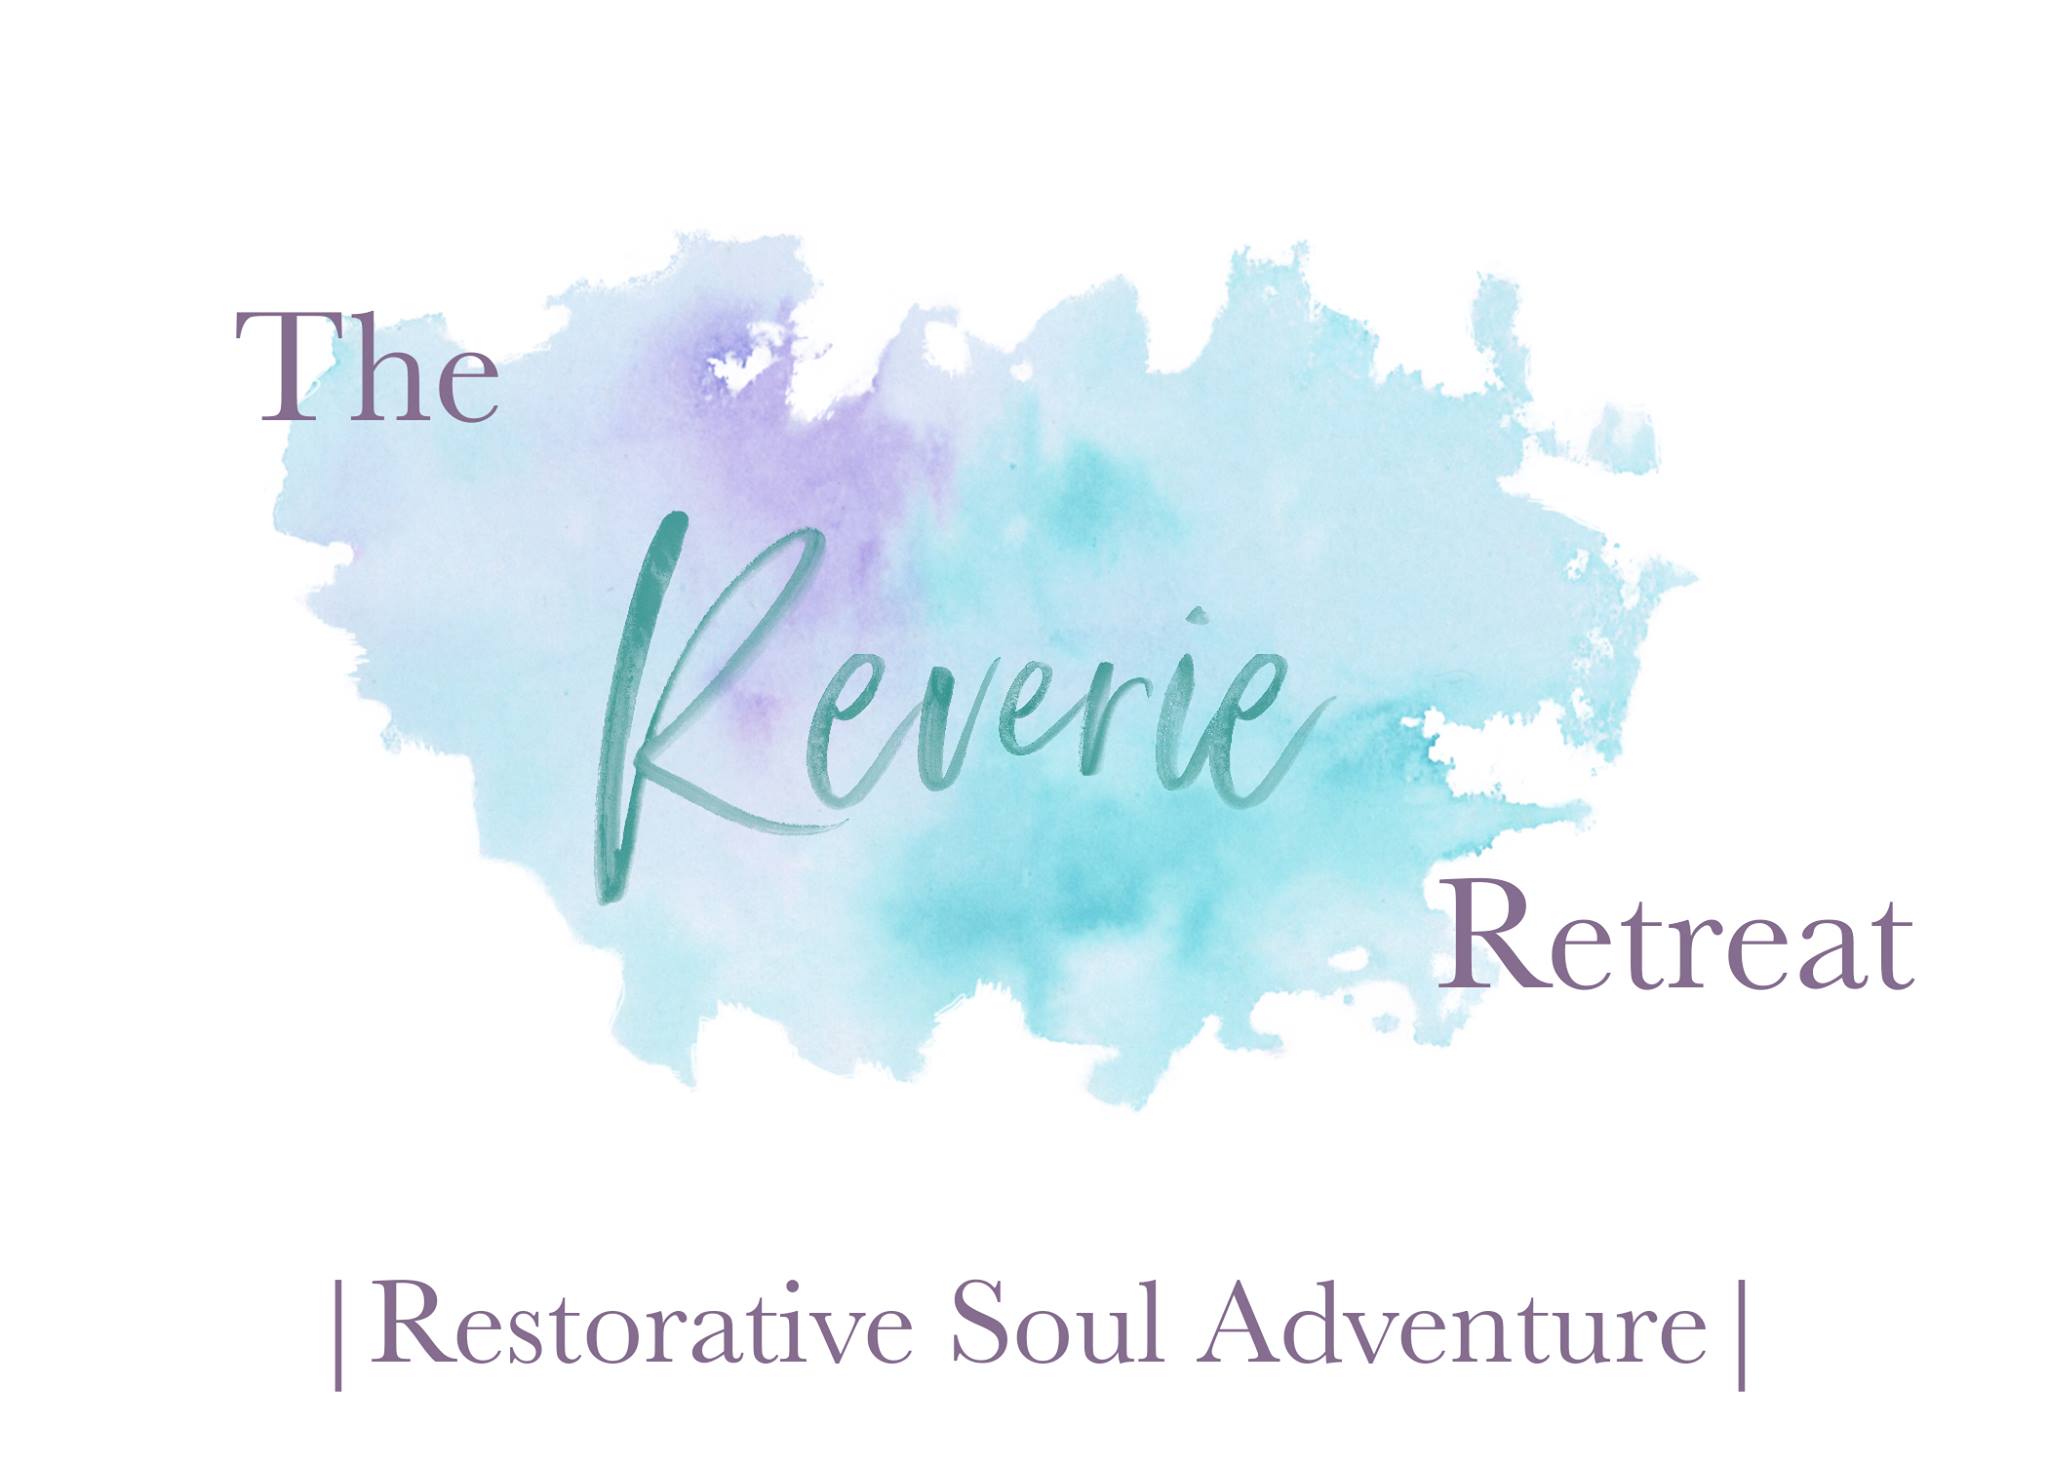 The Reverie Retreat